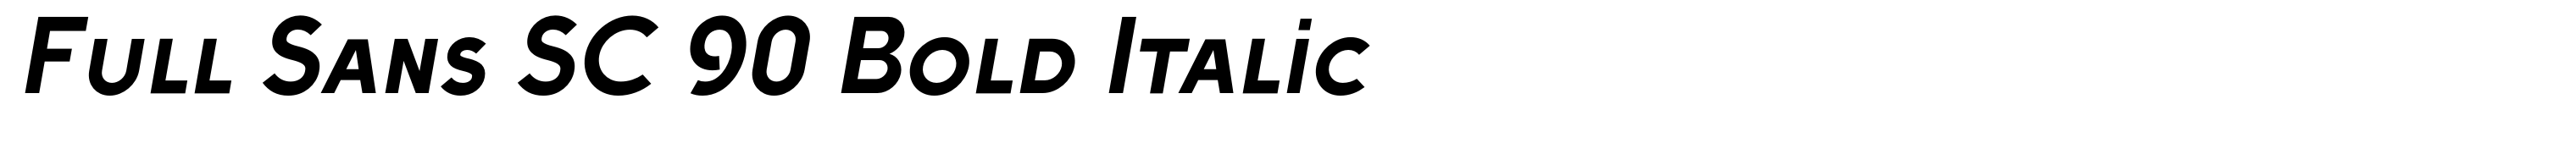 Full Sans SC 90 Bold Italic